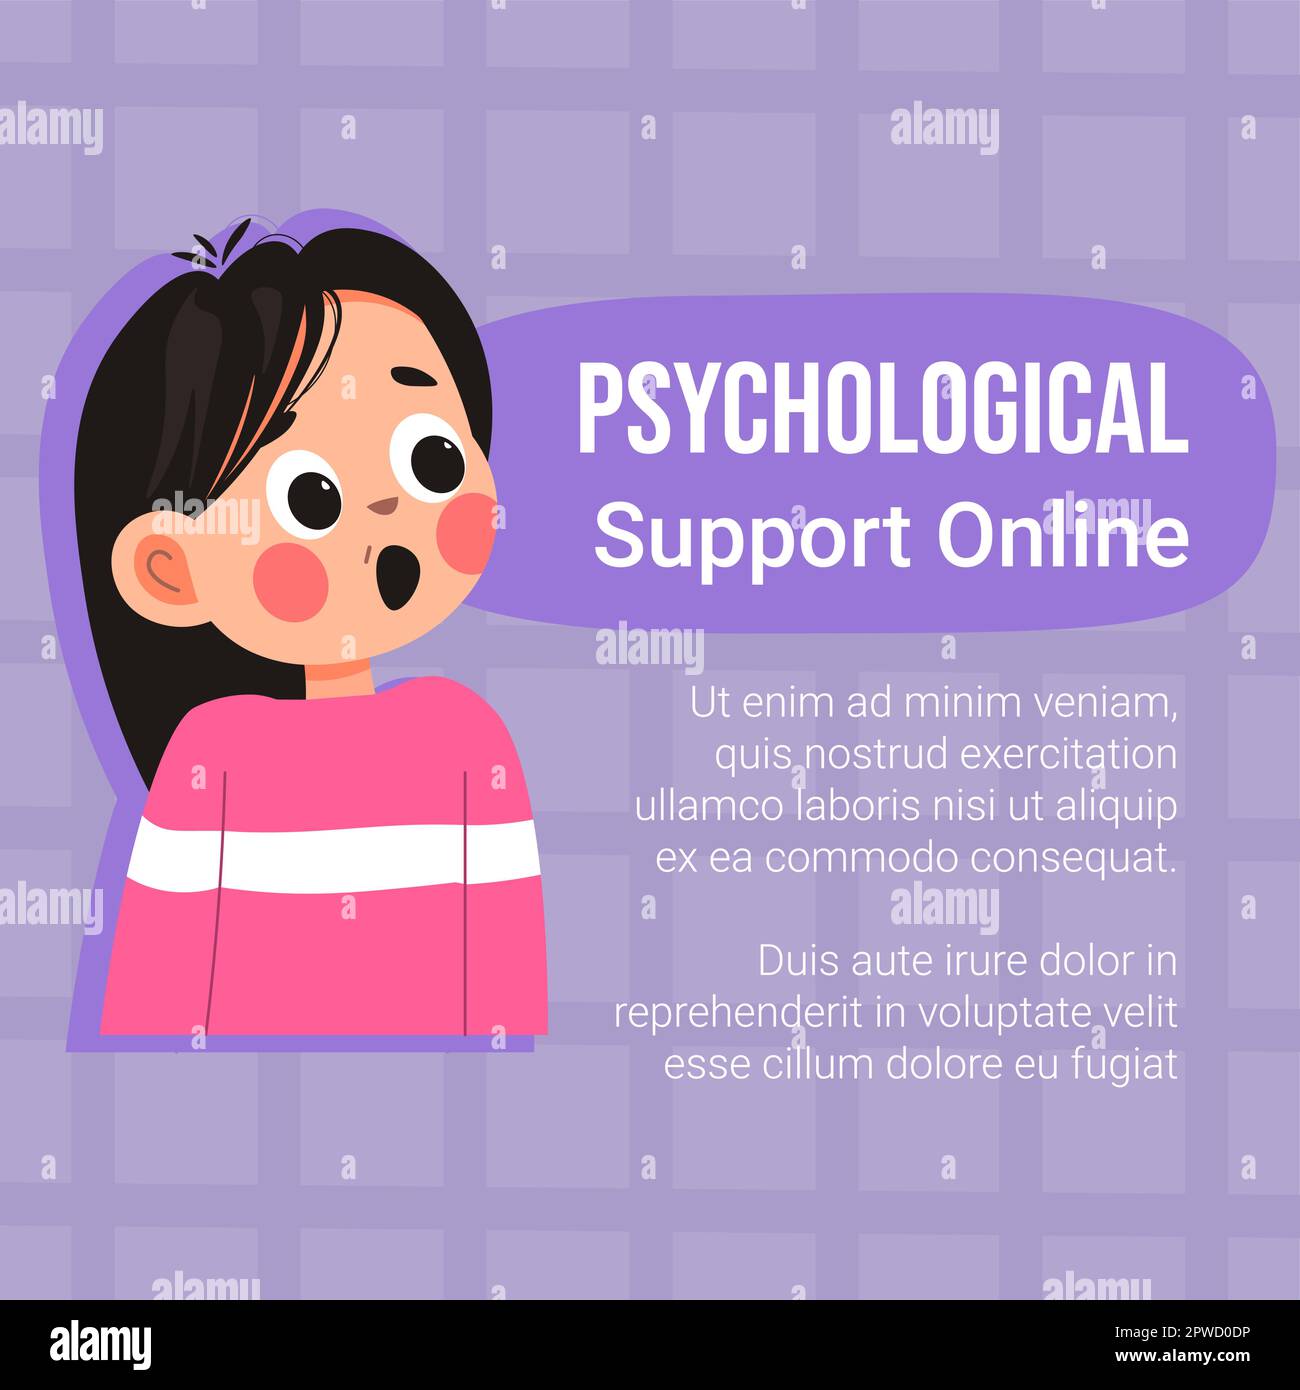 Psychological support for children online, banner Stock Vector